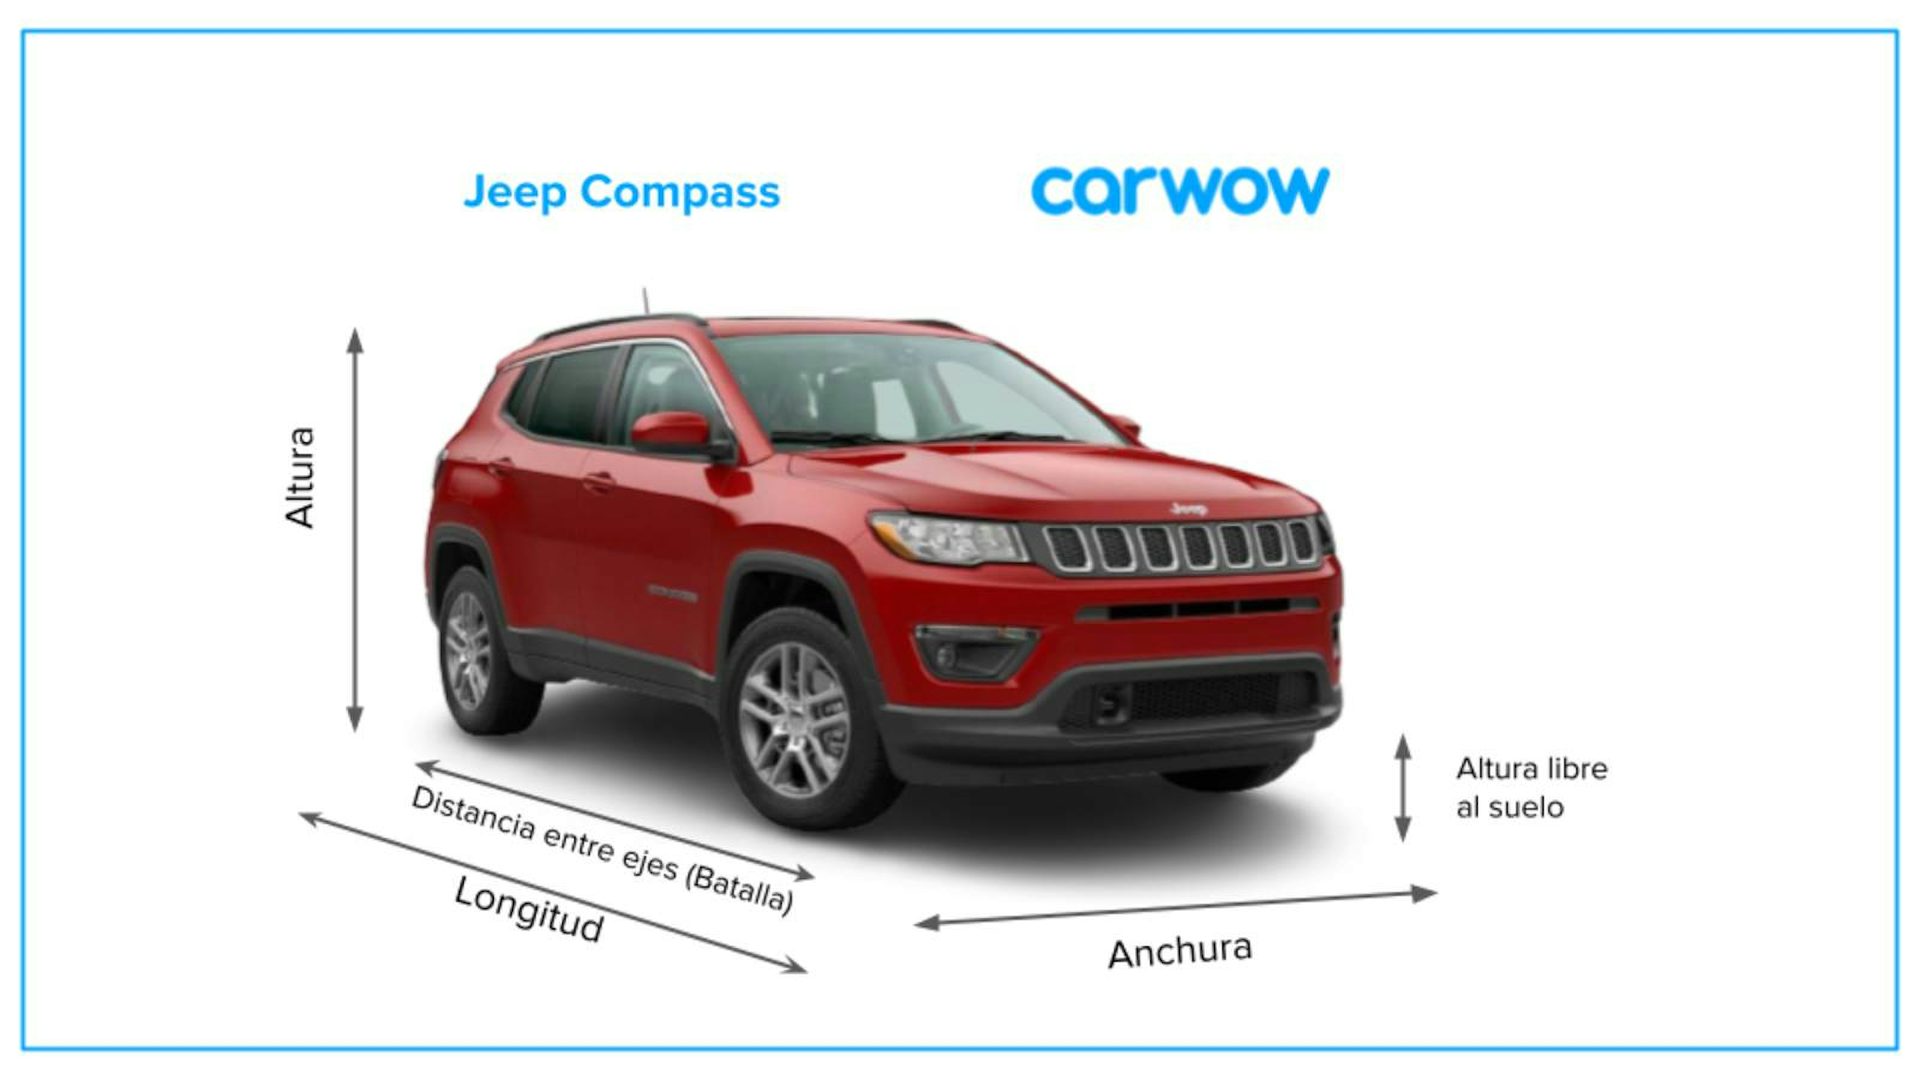 Medidas y maletero del Jeep Compass carwow